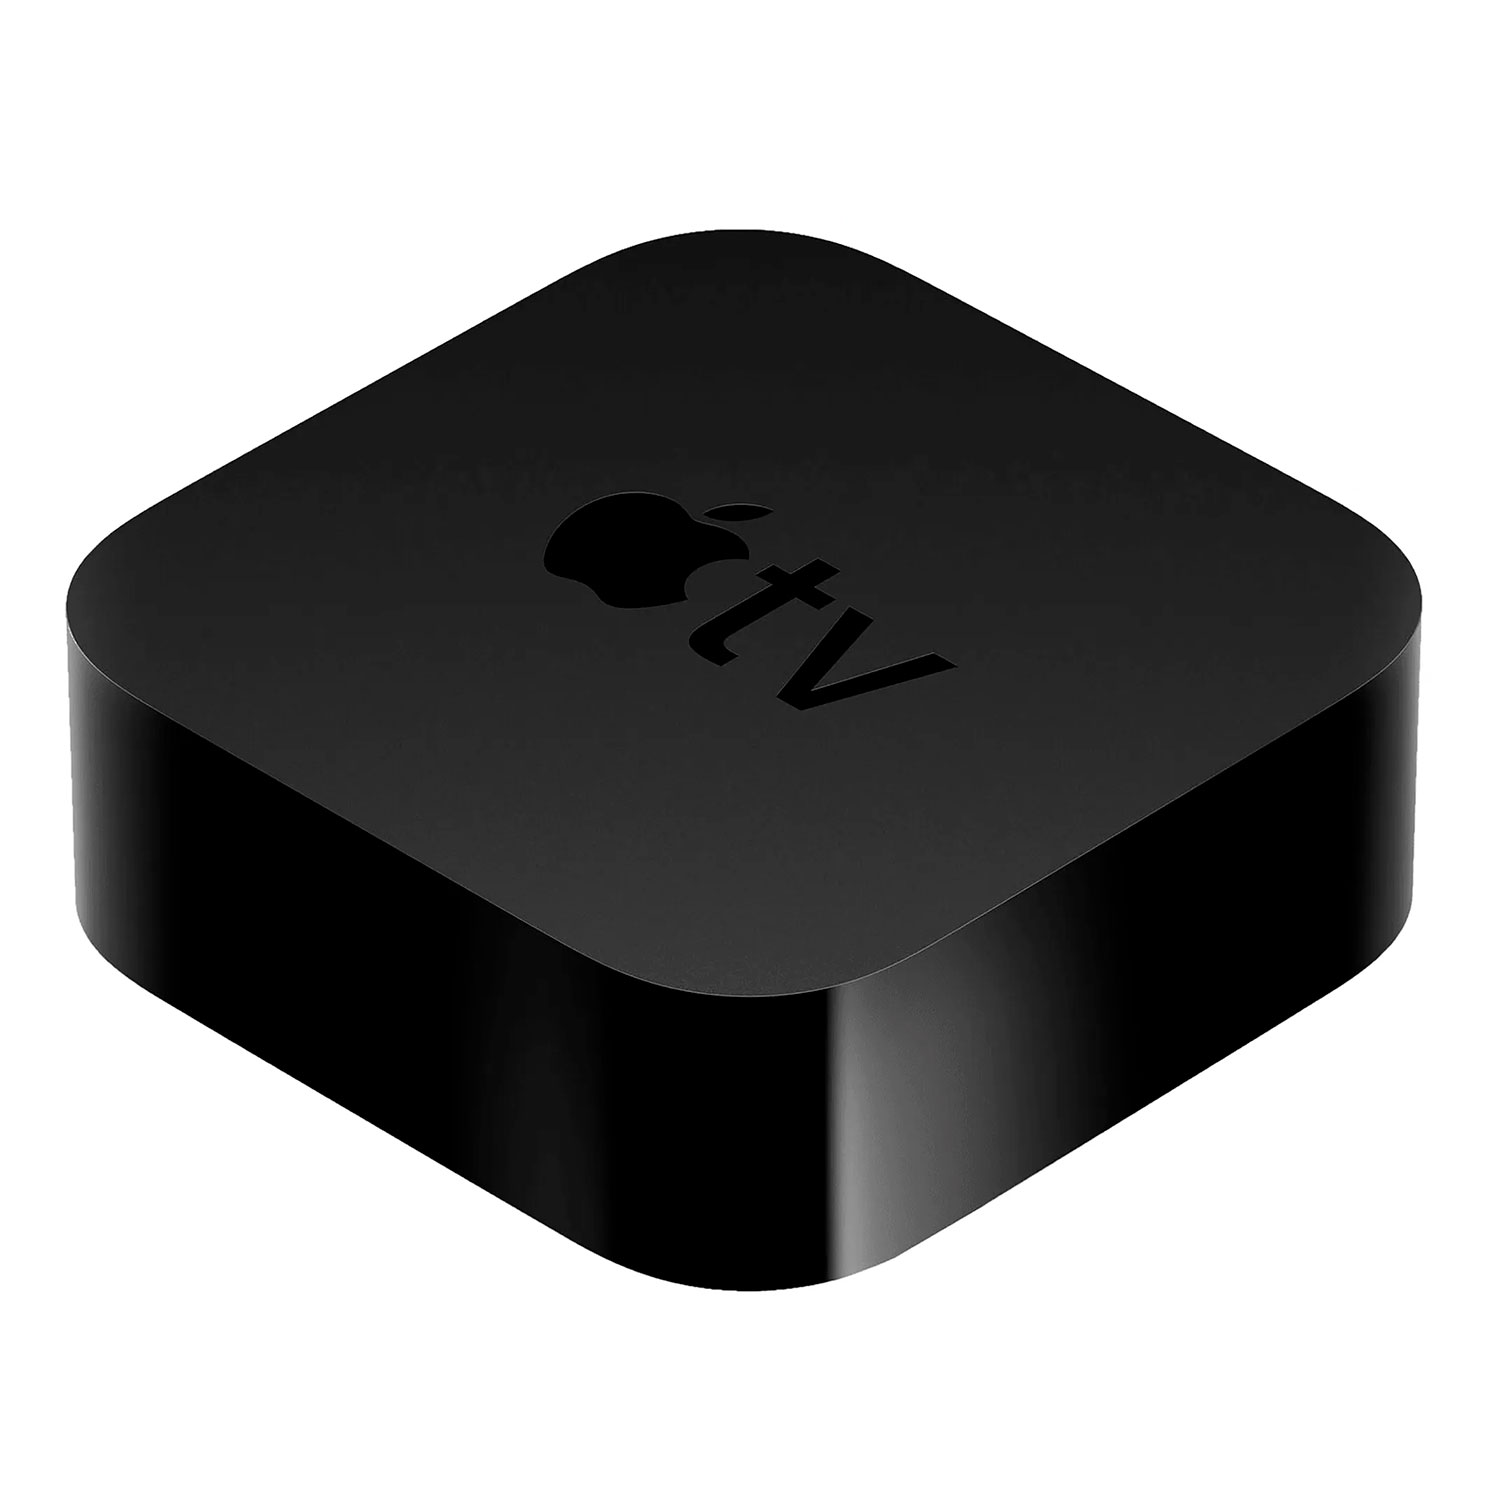 Apple TV MHY93HN/A Full HD Wi-Fi 32GB + Controle Siri New Remote